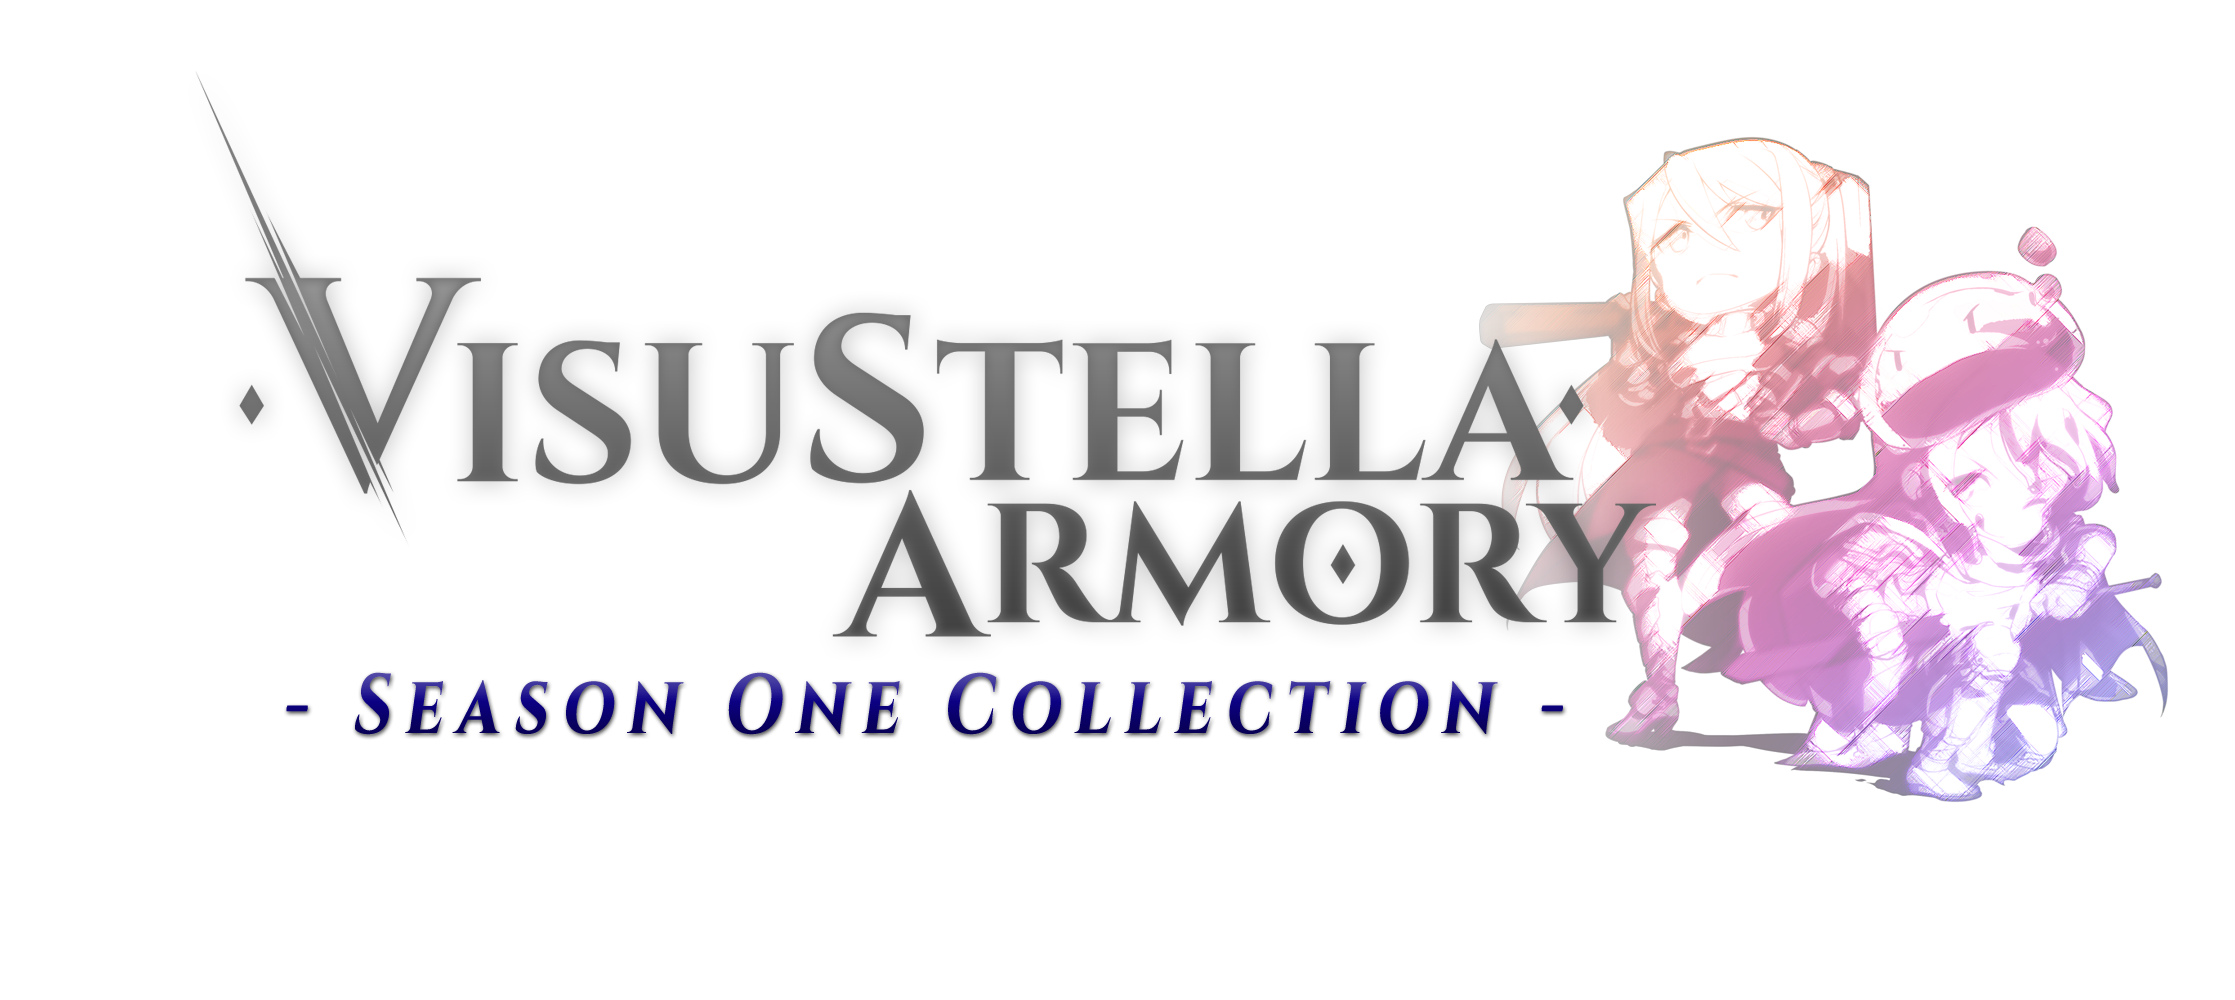 [✦] VisuStella Armory Season One Collection